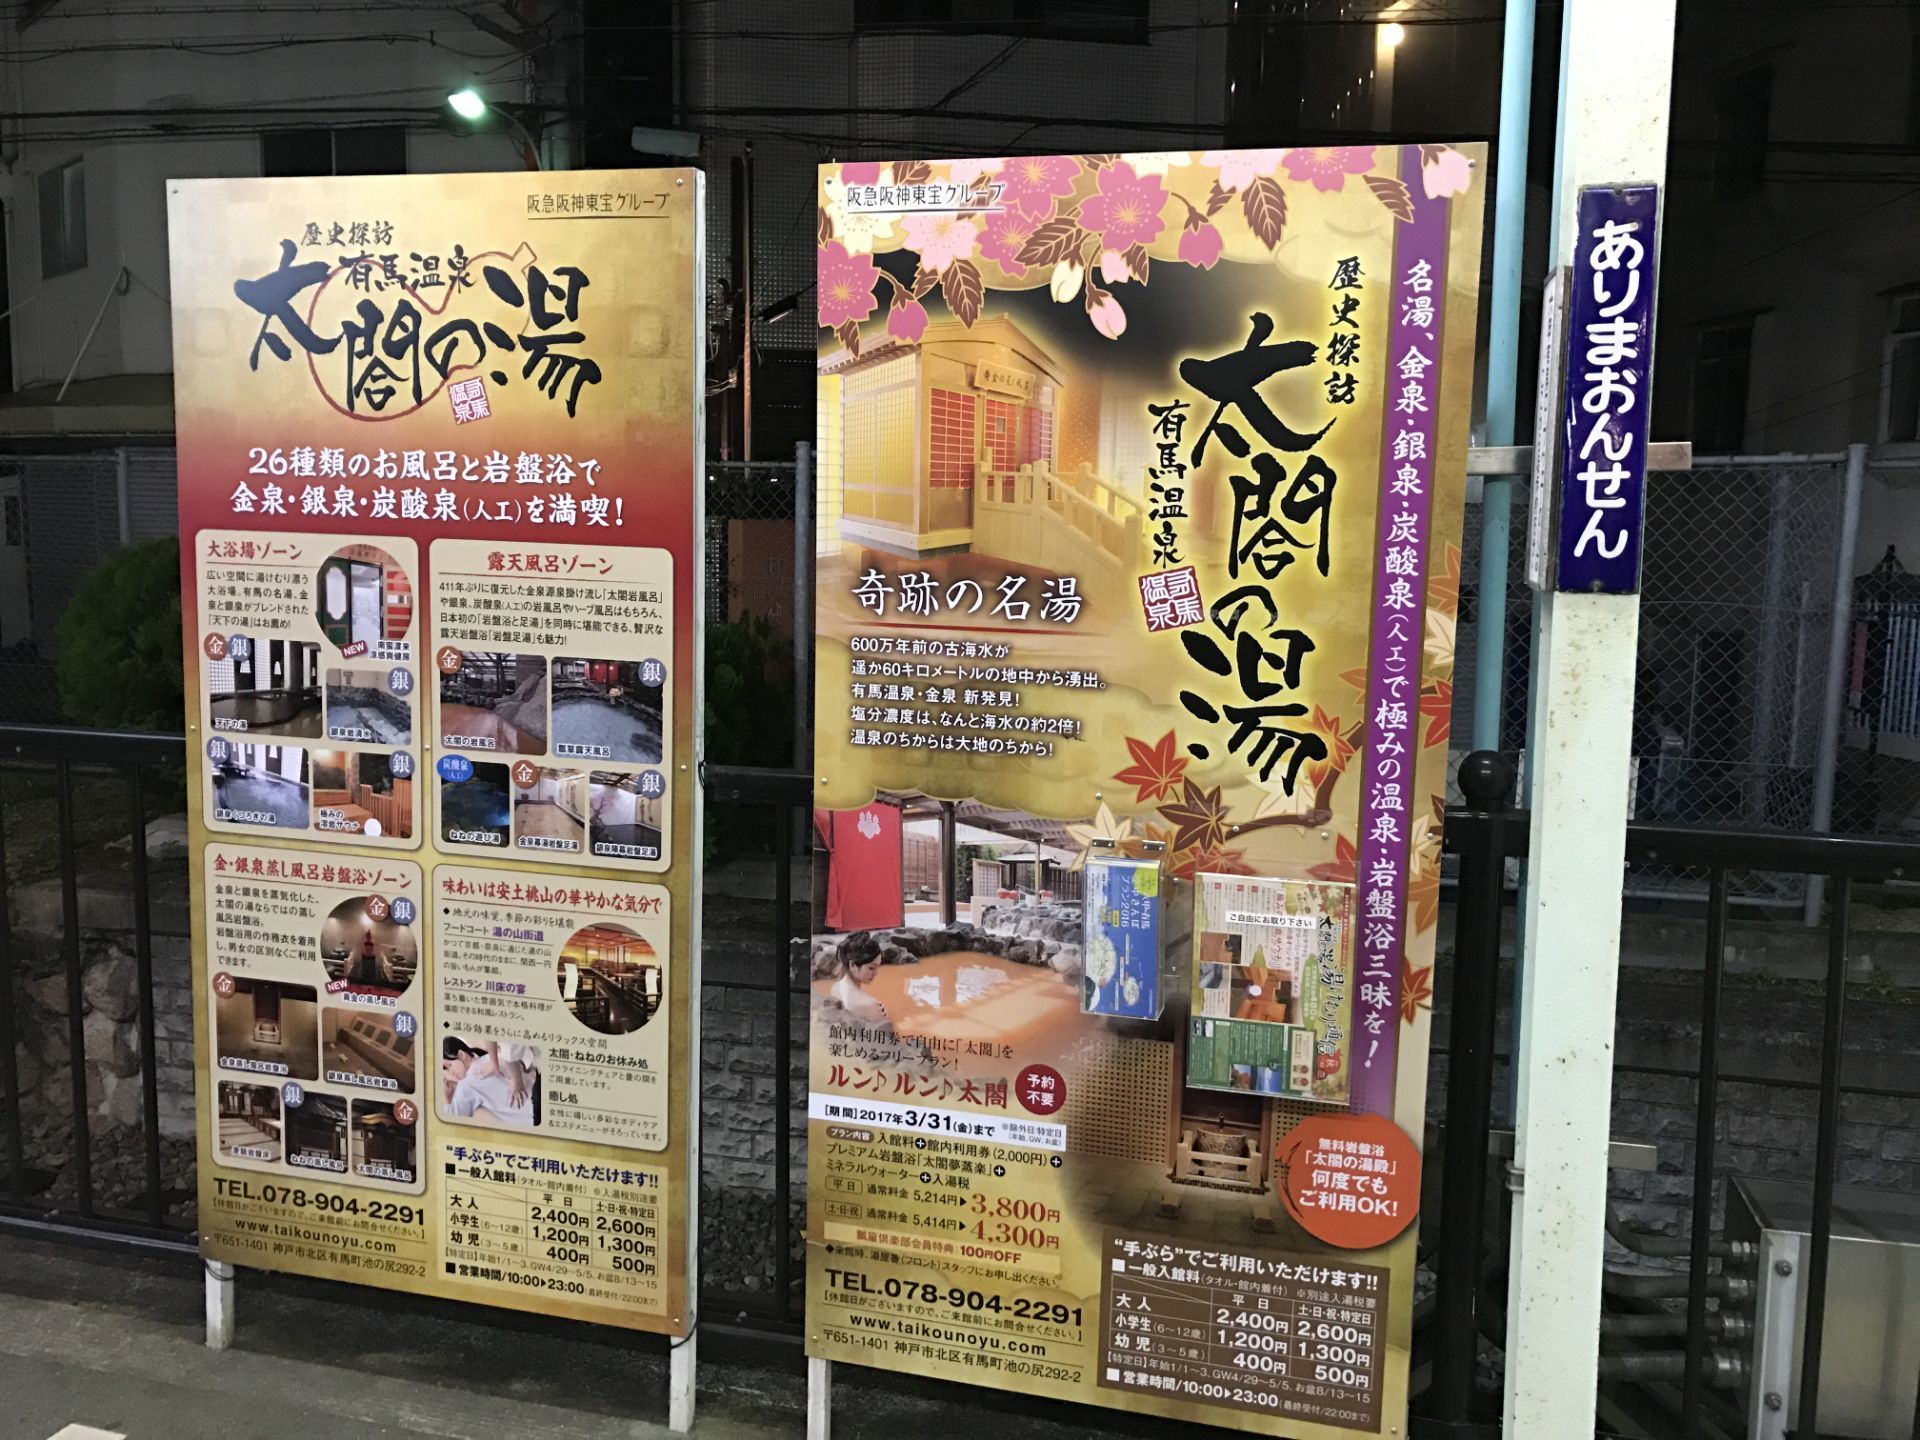 Taiko No Yu Attractions Kobe Travel Review Travel Guide Trip Com